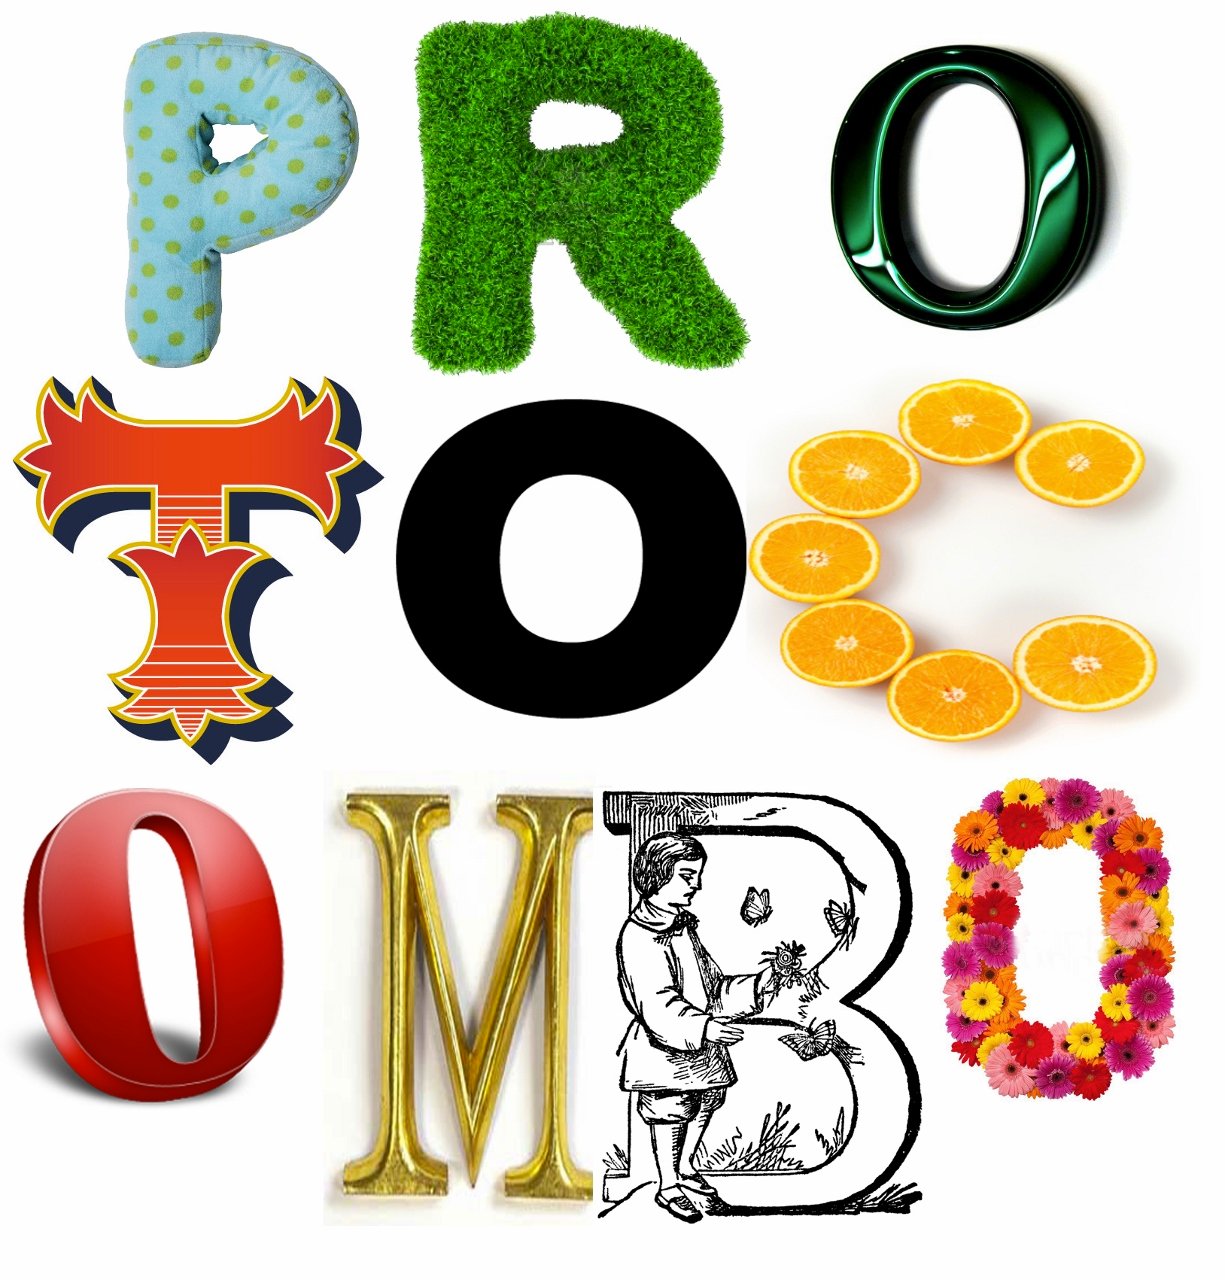 Protocombo